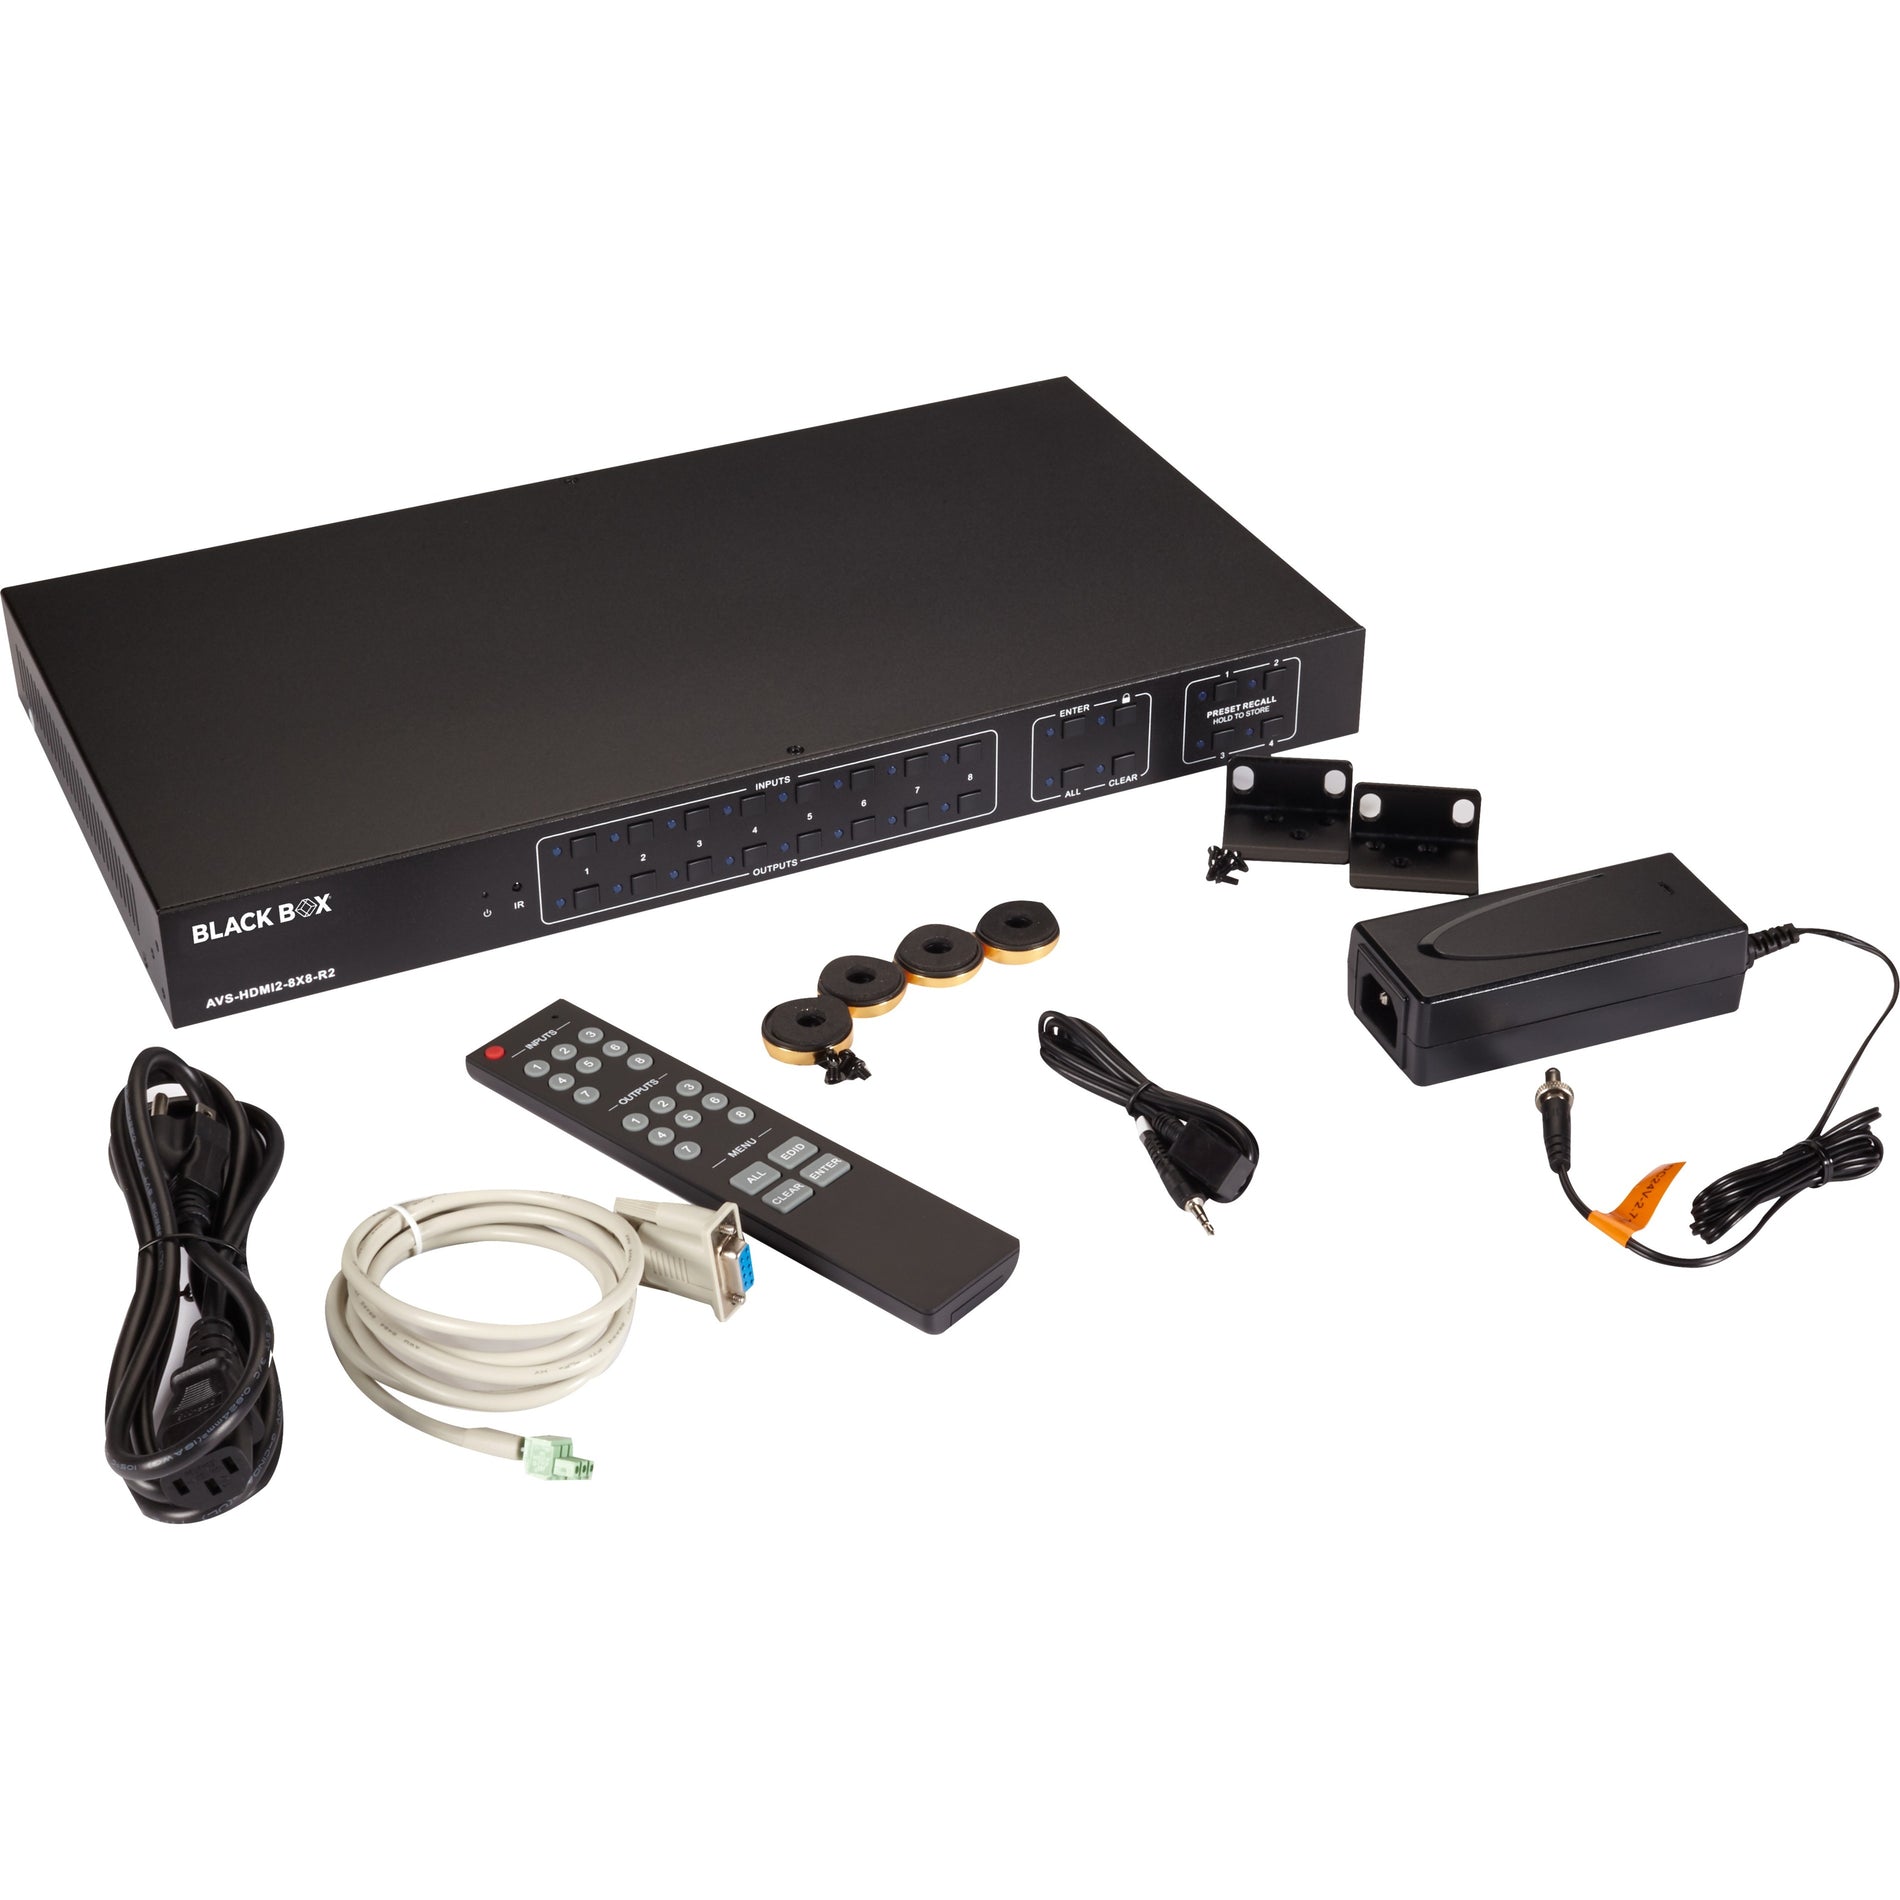 Black Box AVS-HDMI2-8X8-R2 Video Matrix Switcher - HDMI 2.0, 4K Graphics Modes, 3 Year Limited Warranty